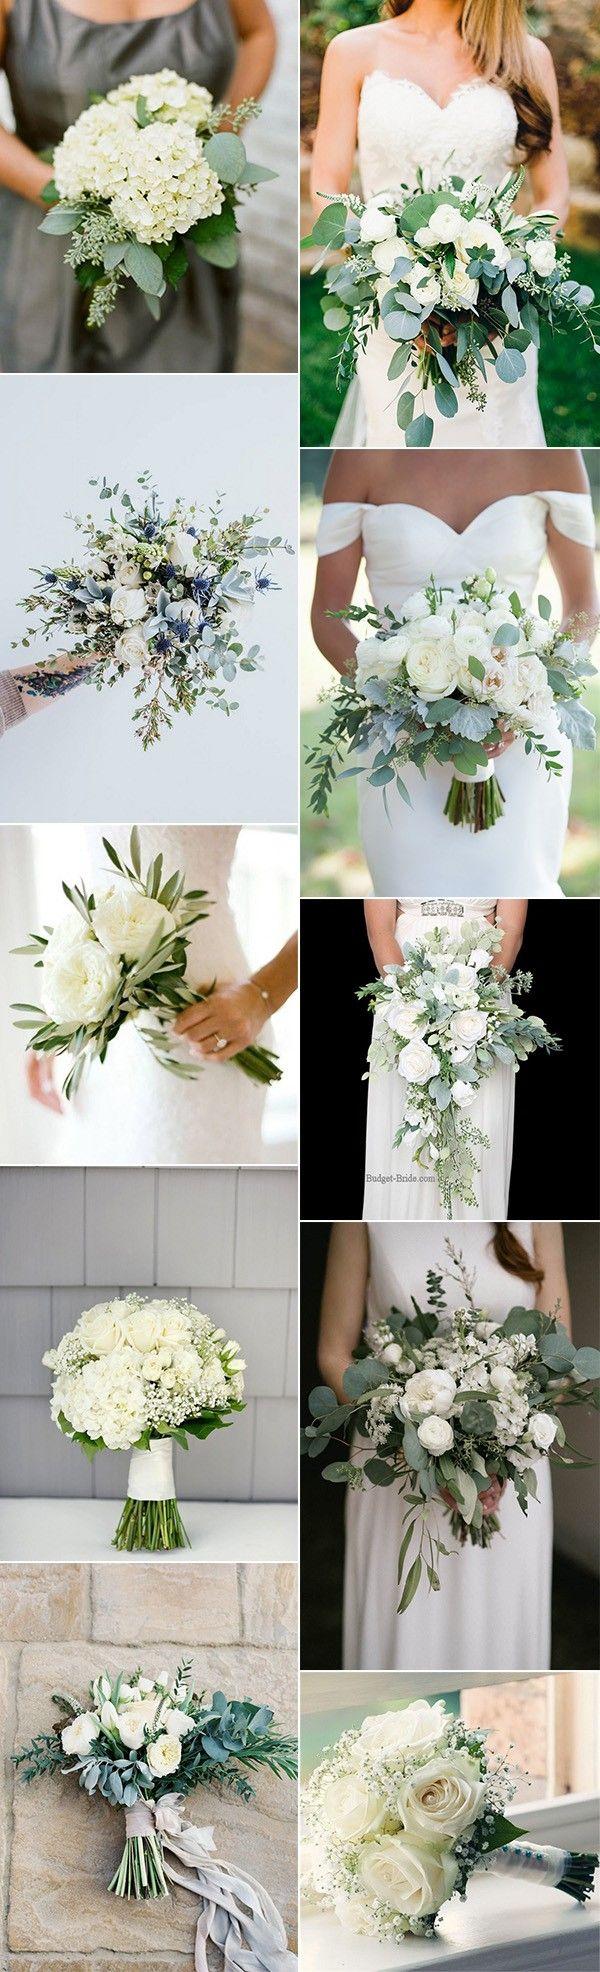 زفاف - Top 10 White And Green Wedding Bouquet Ideas You’ll Love